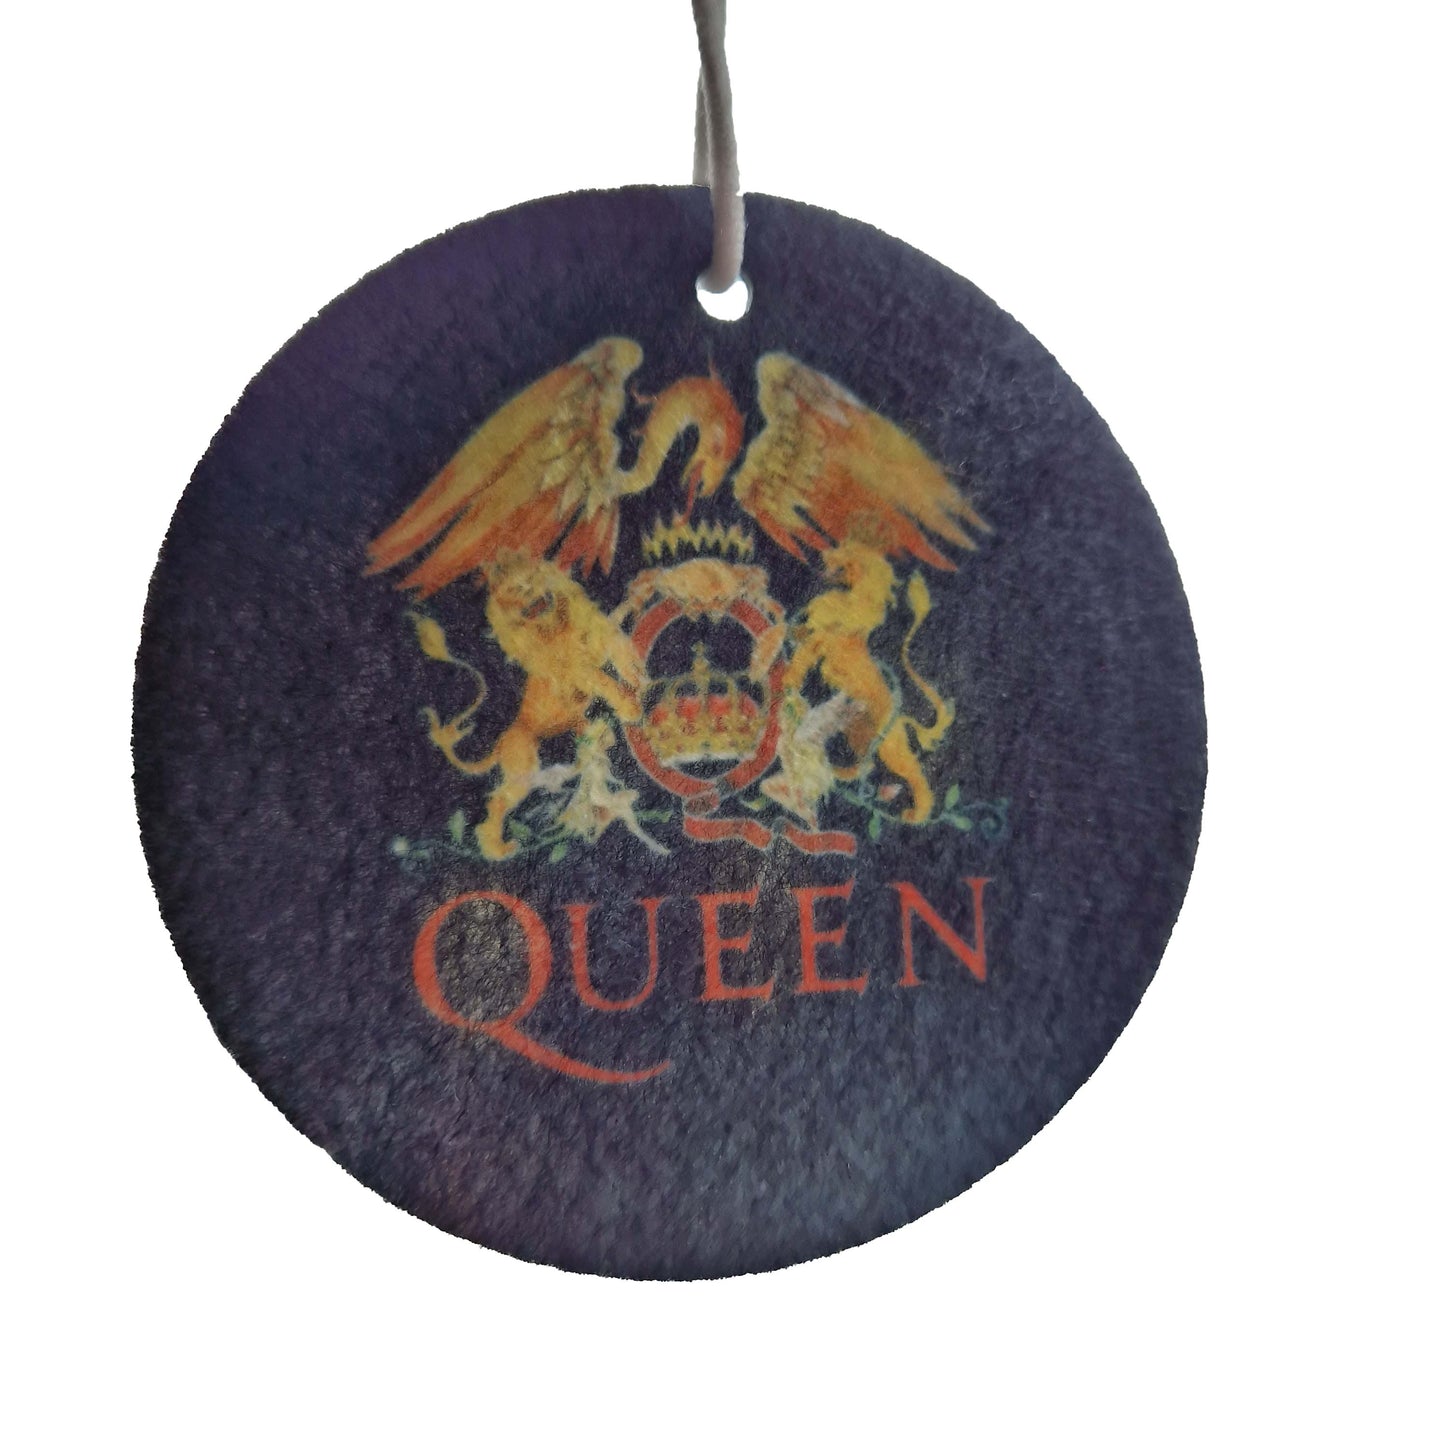 queen band memorabilia for sale | photo car air freshener